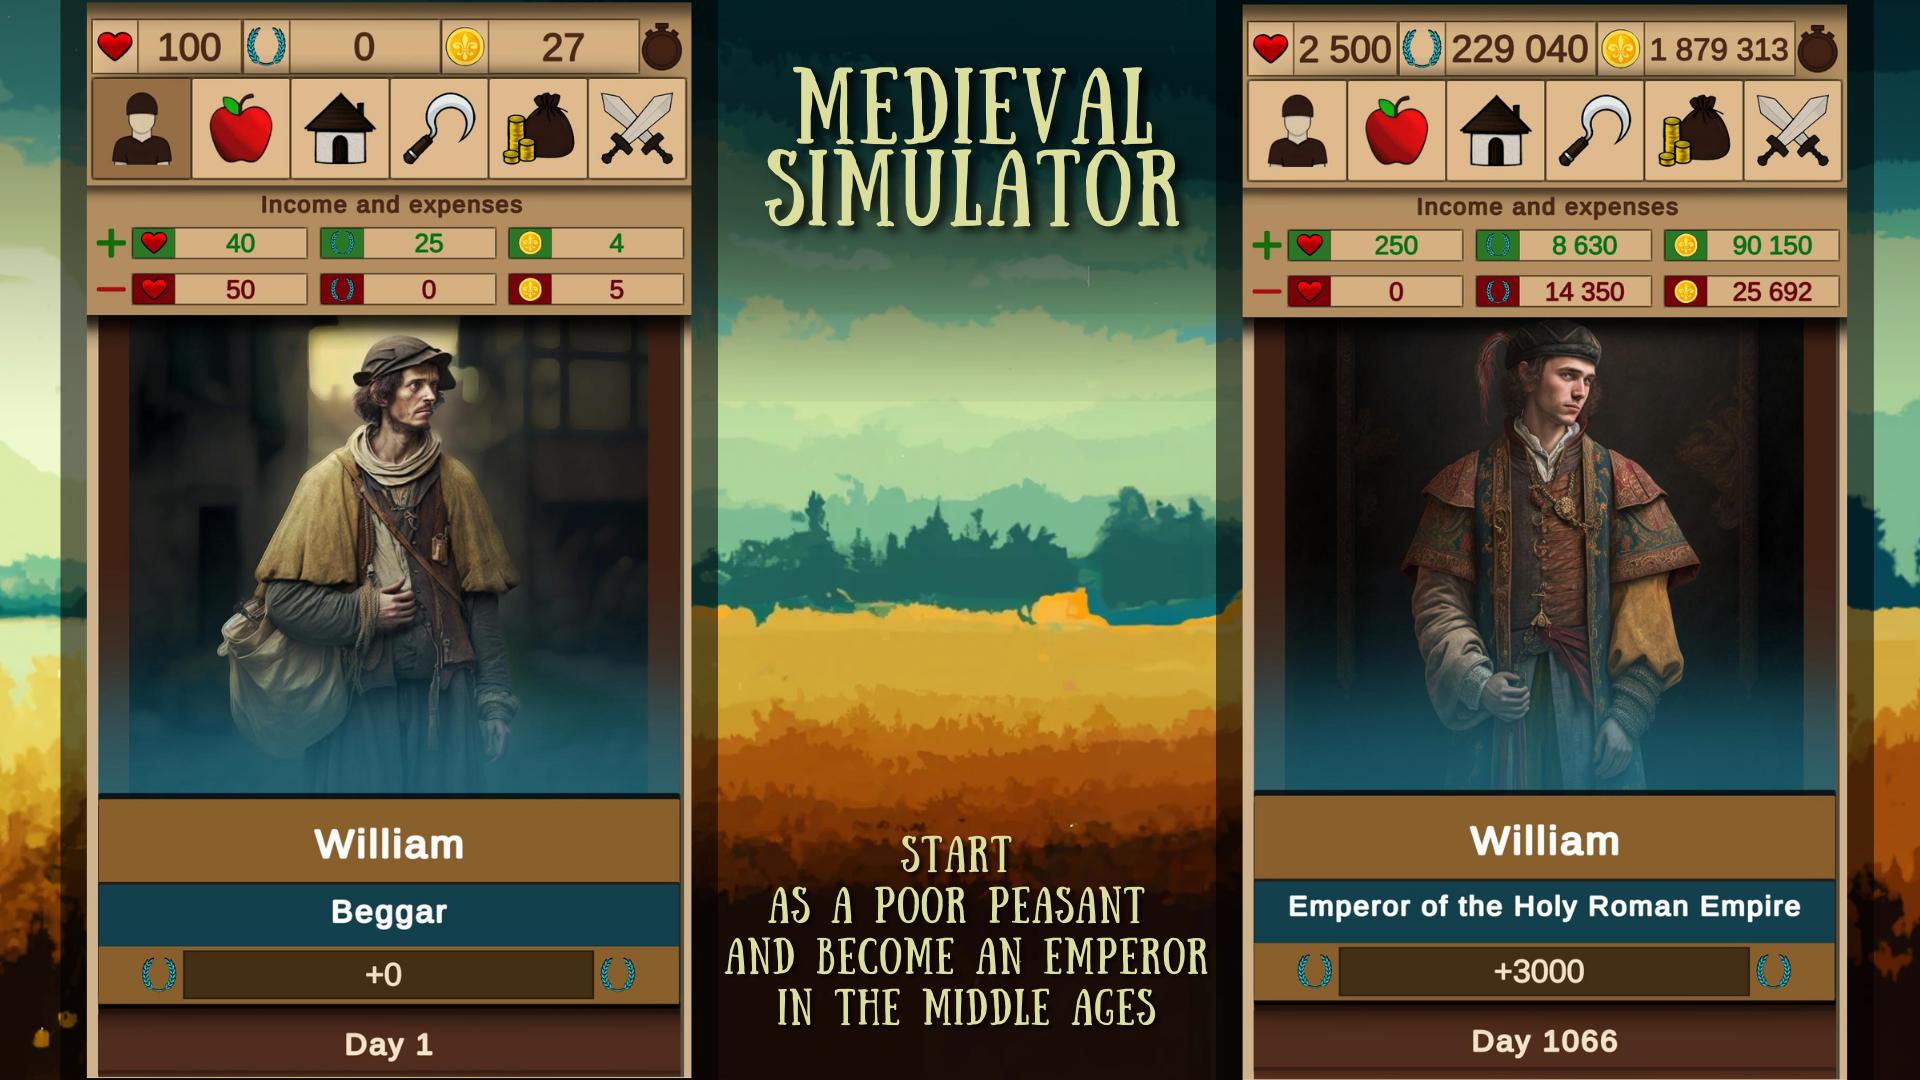 Medieval Battle Simulator - Baixar APK para Android